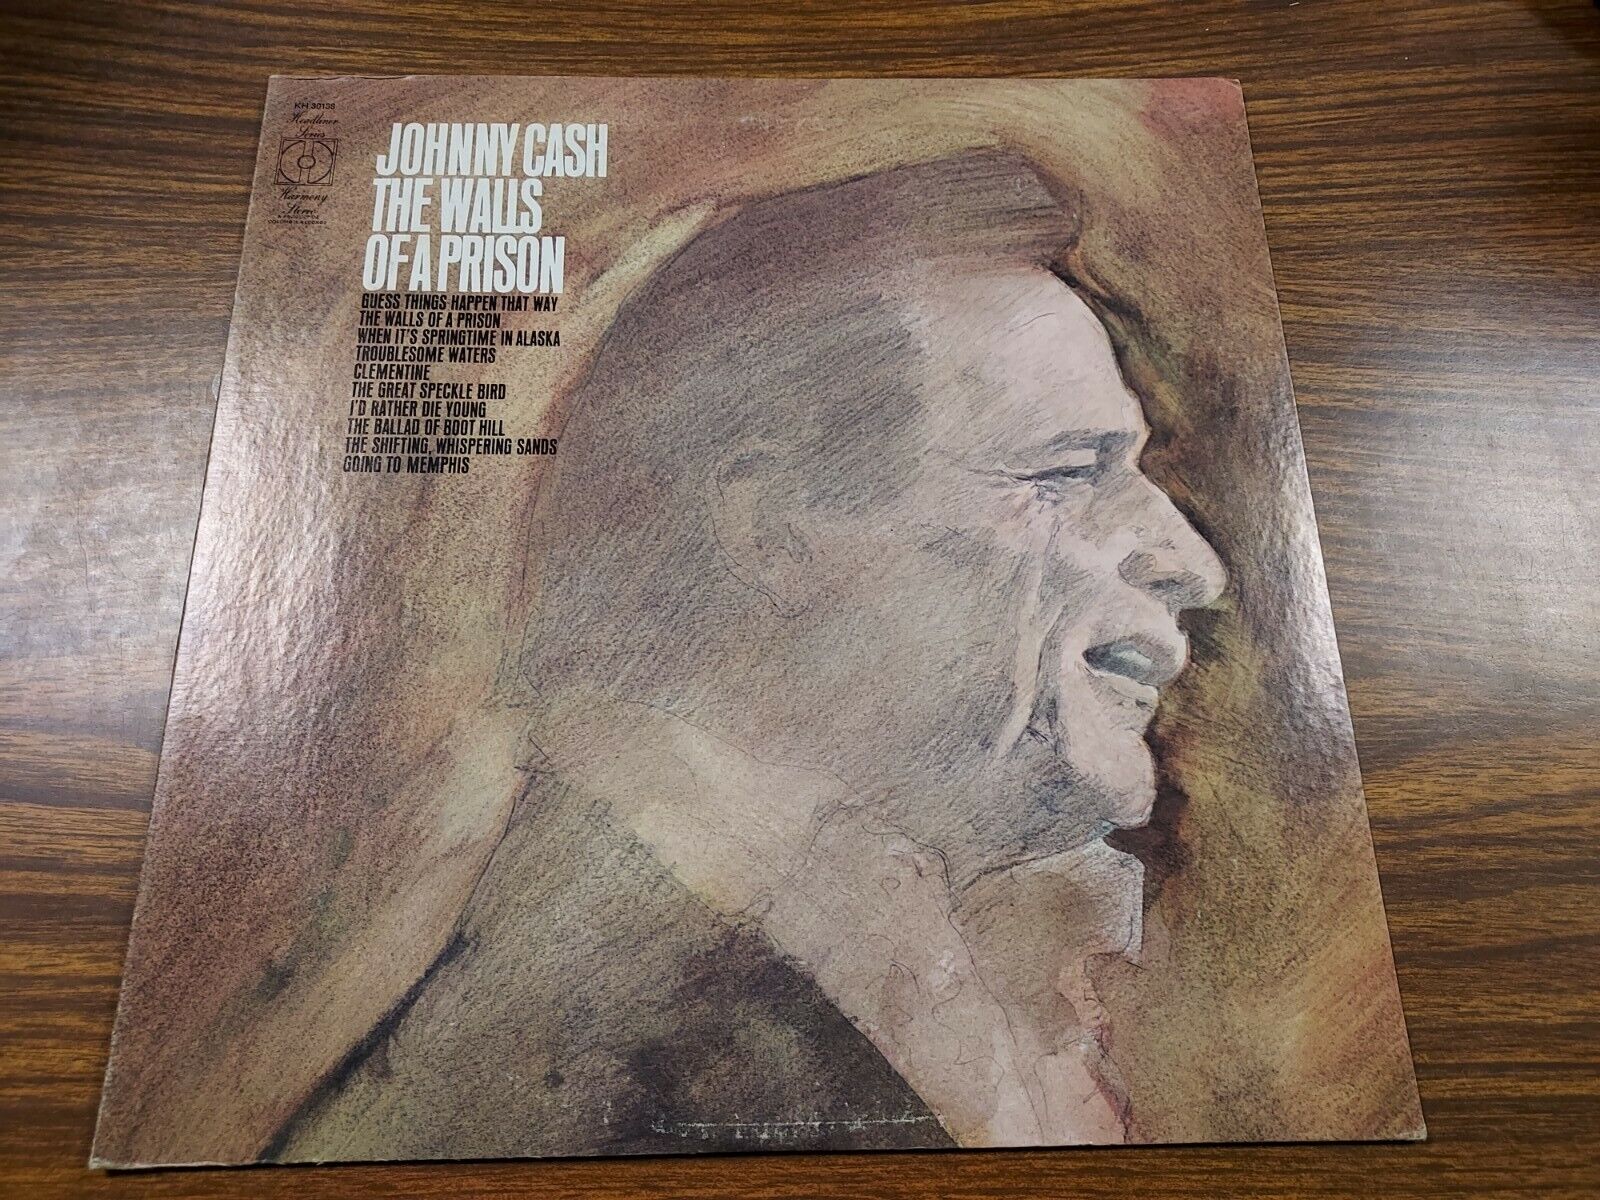 JOHNNY CASH*THE WALLS OF A PRISON*VINYL LP RECORD HARMONY KH 30138 VG+/VG 1970